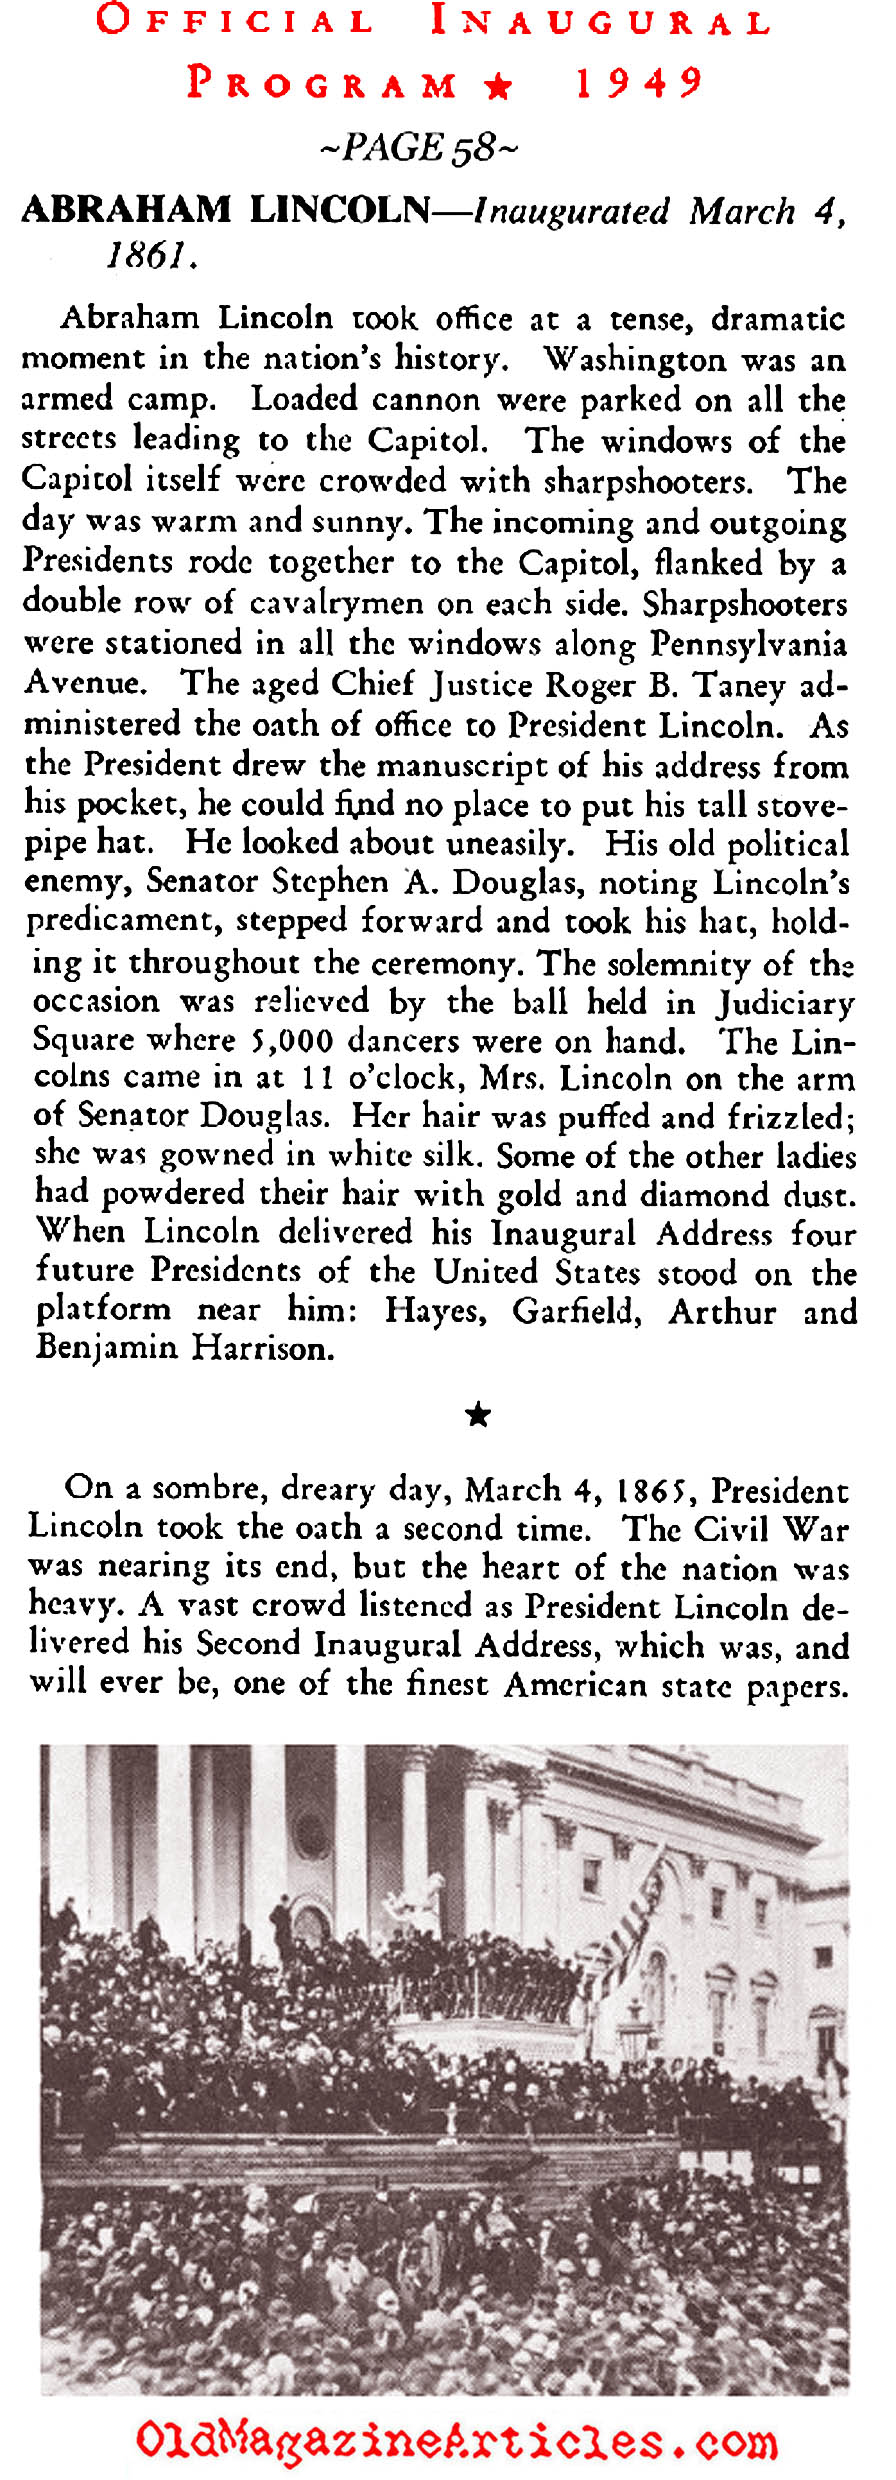 The Two Lincoln Inaugurations (Inaugural Program, 1949)